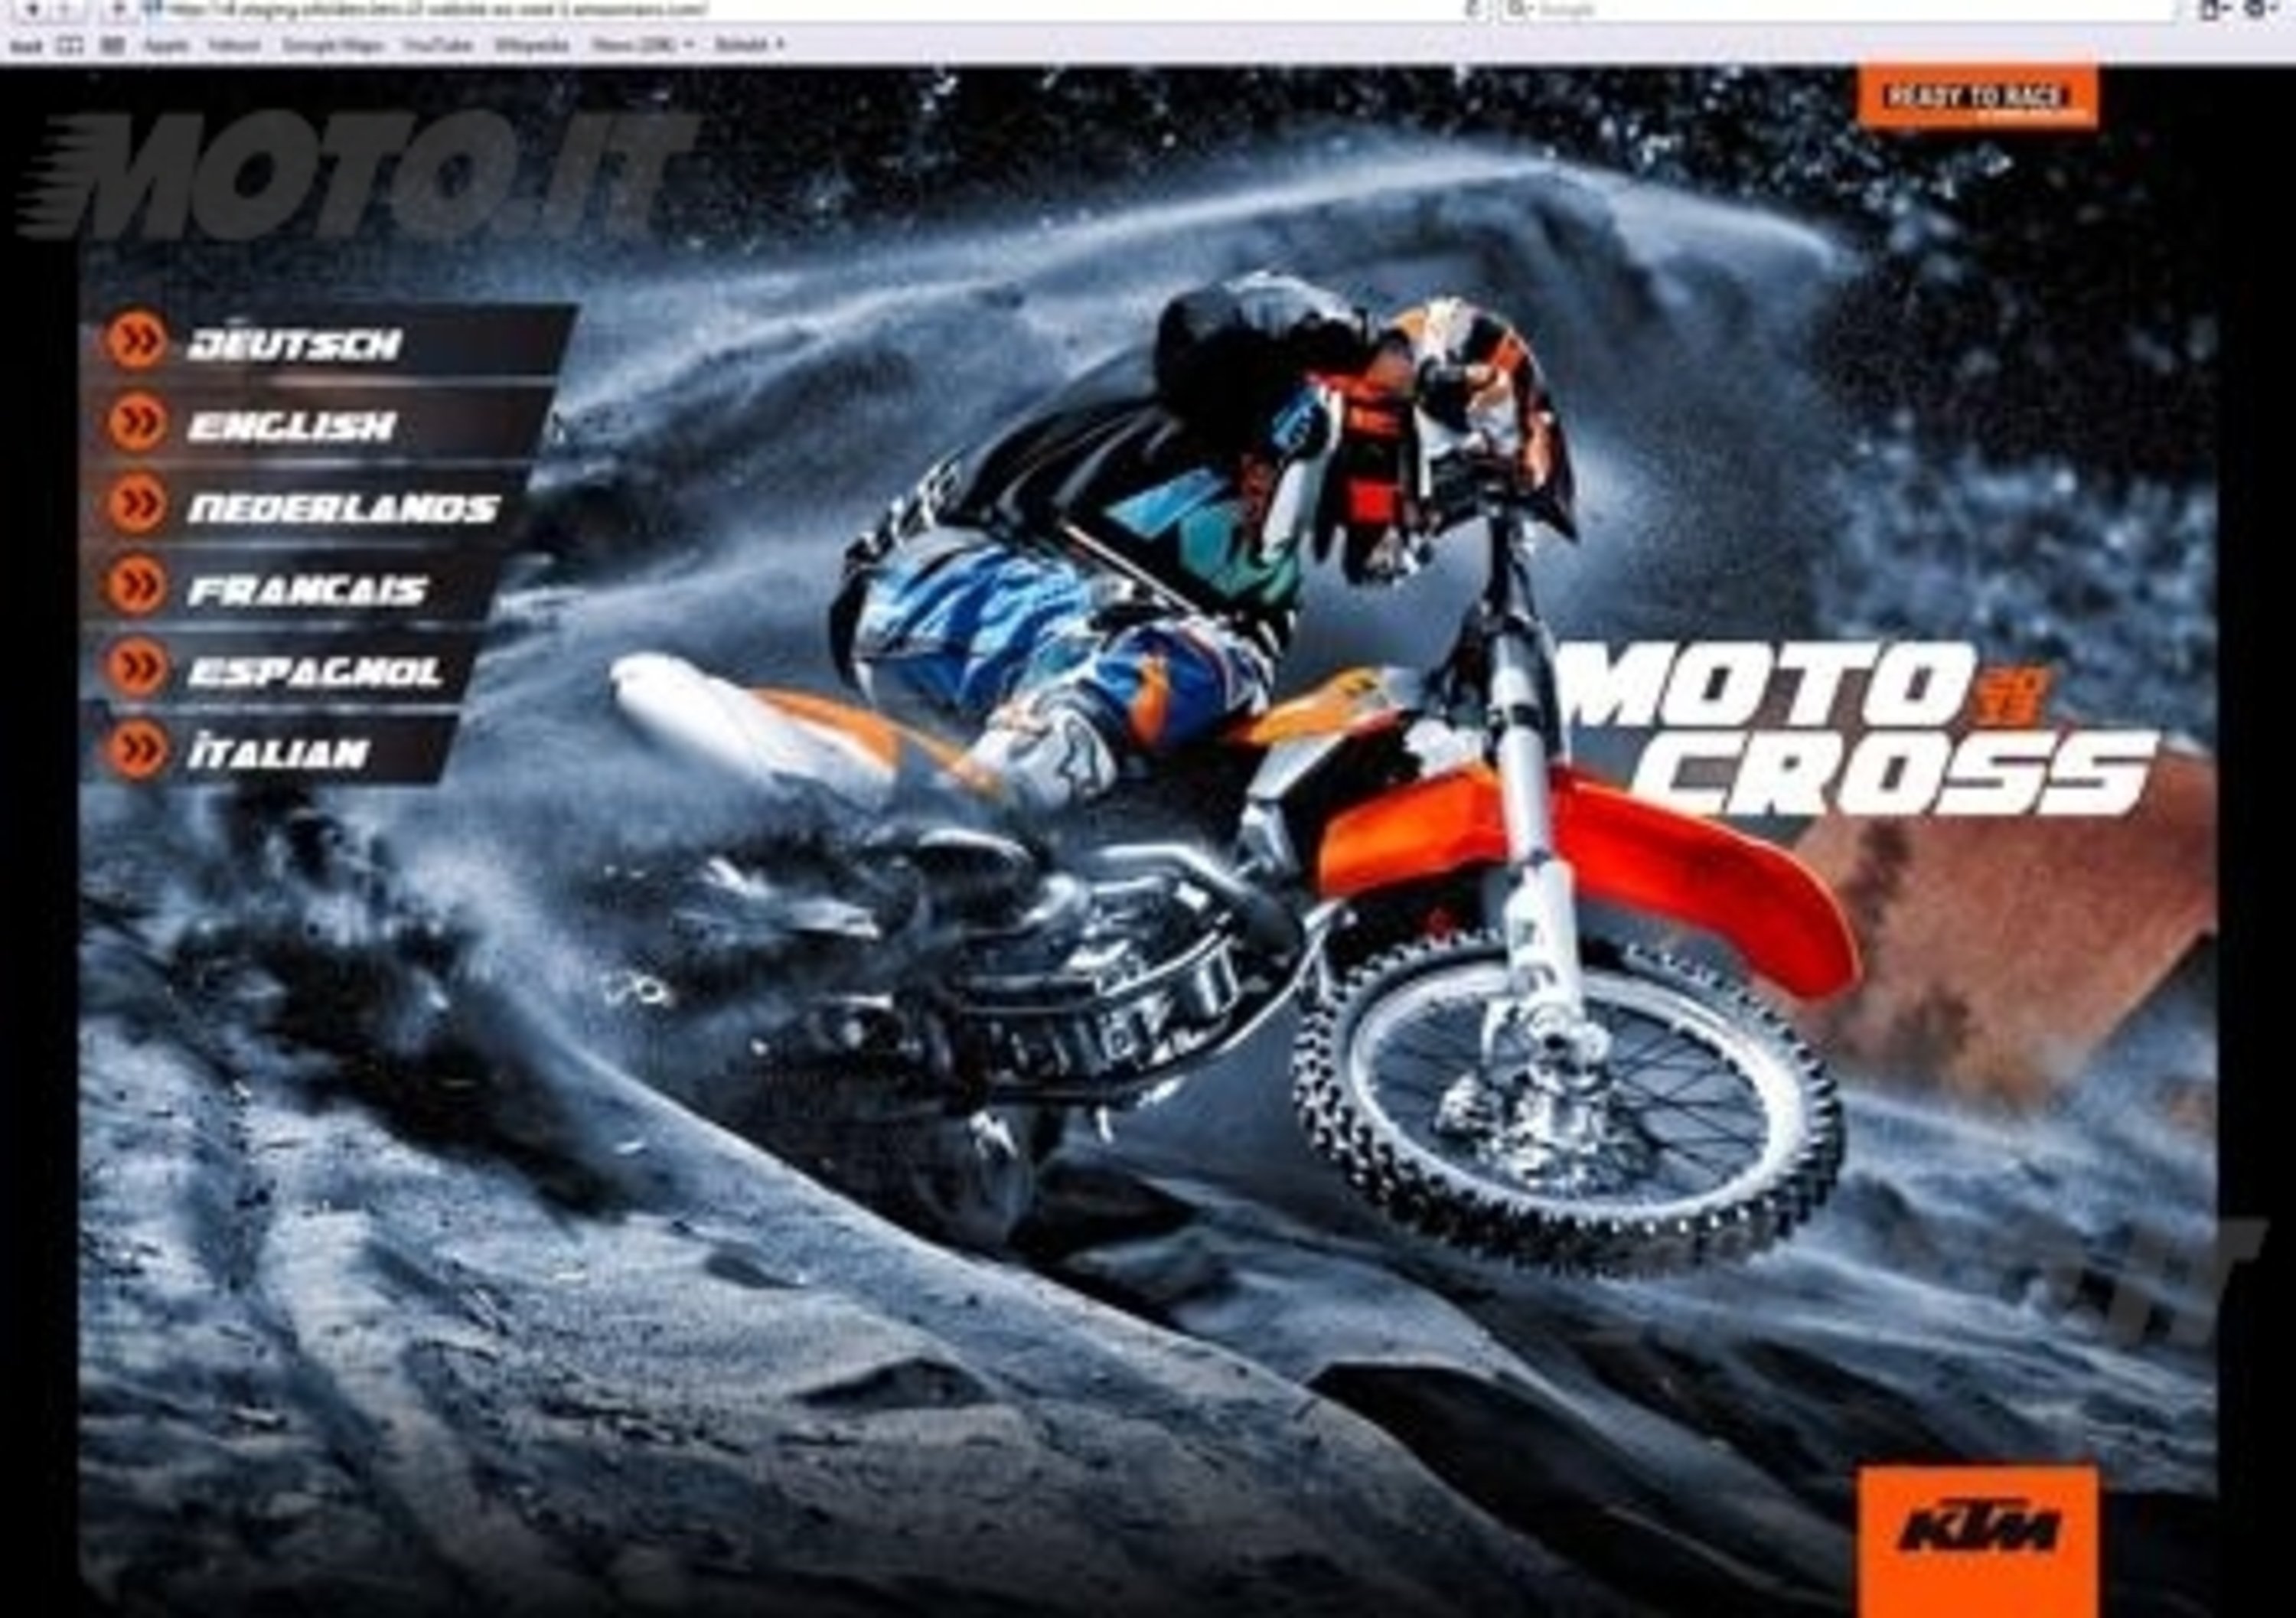 La nuova gamma KTM Motocross 2013 ora disponibile per Apple iPad